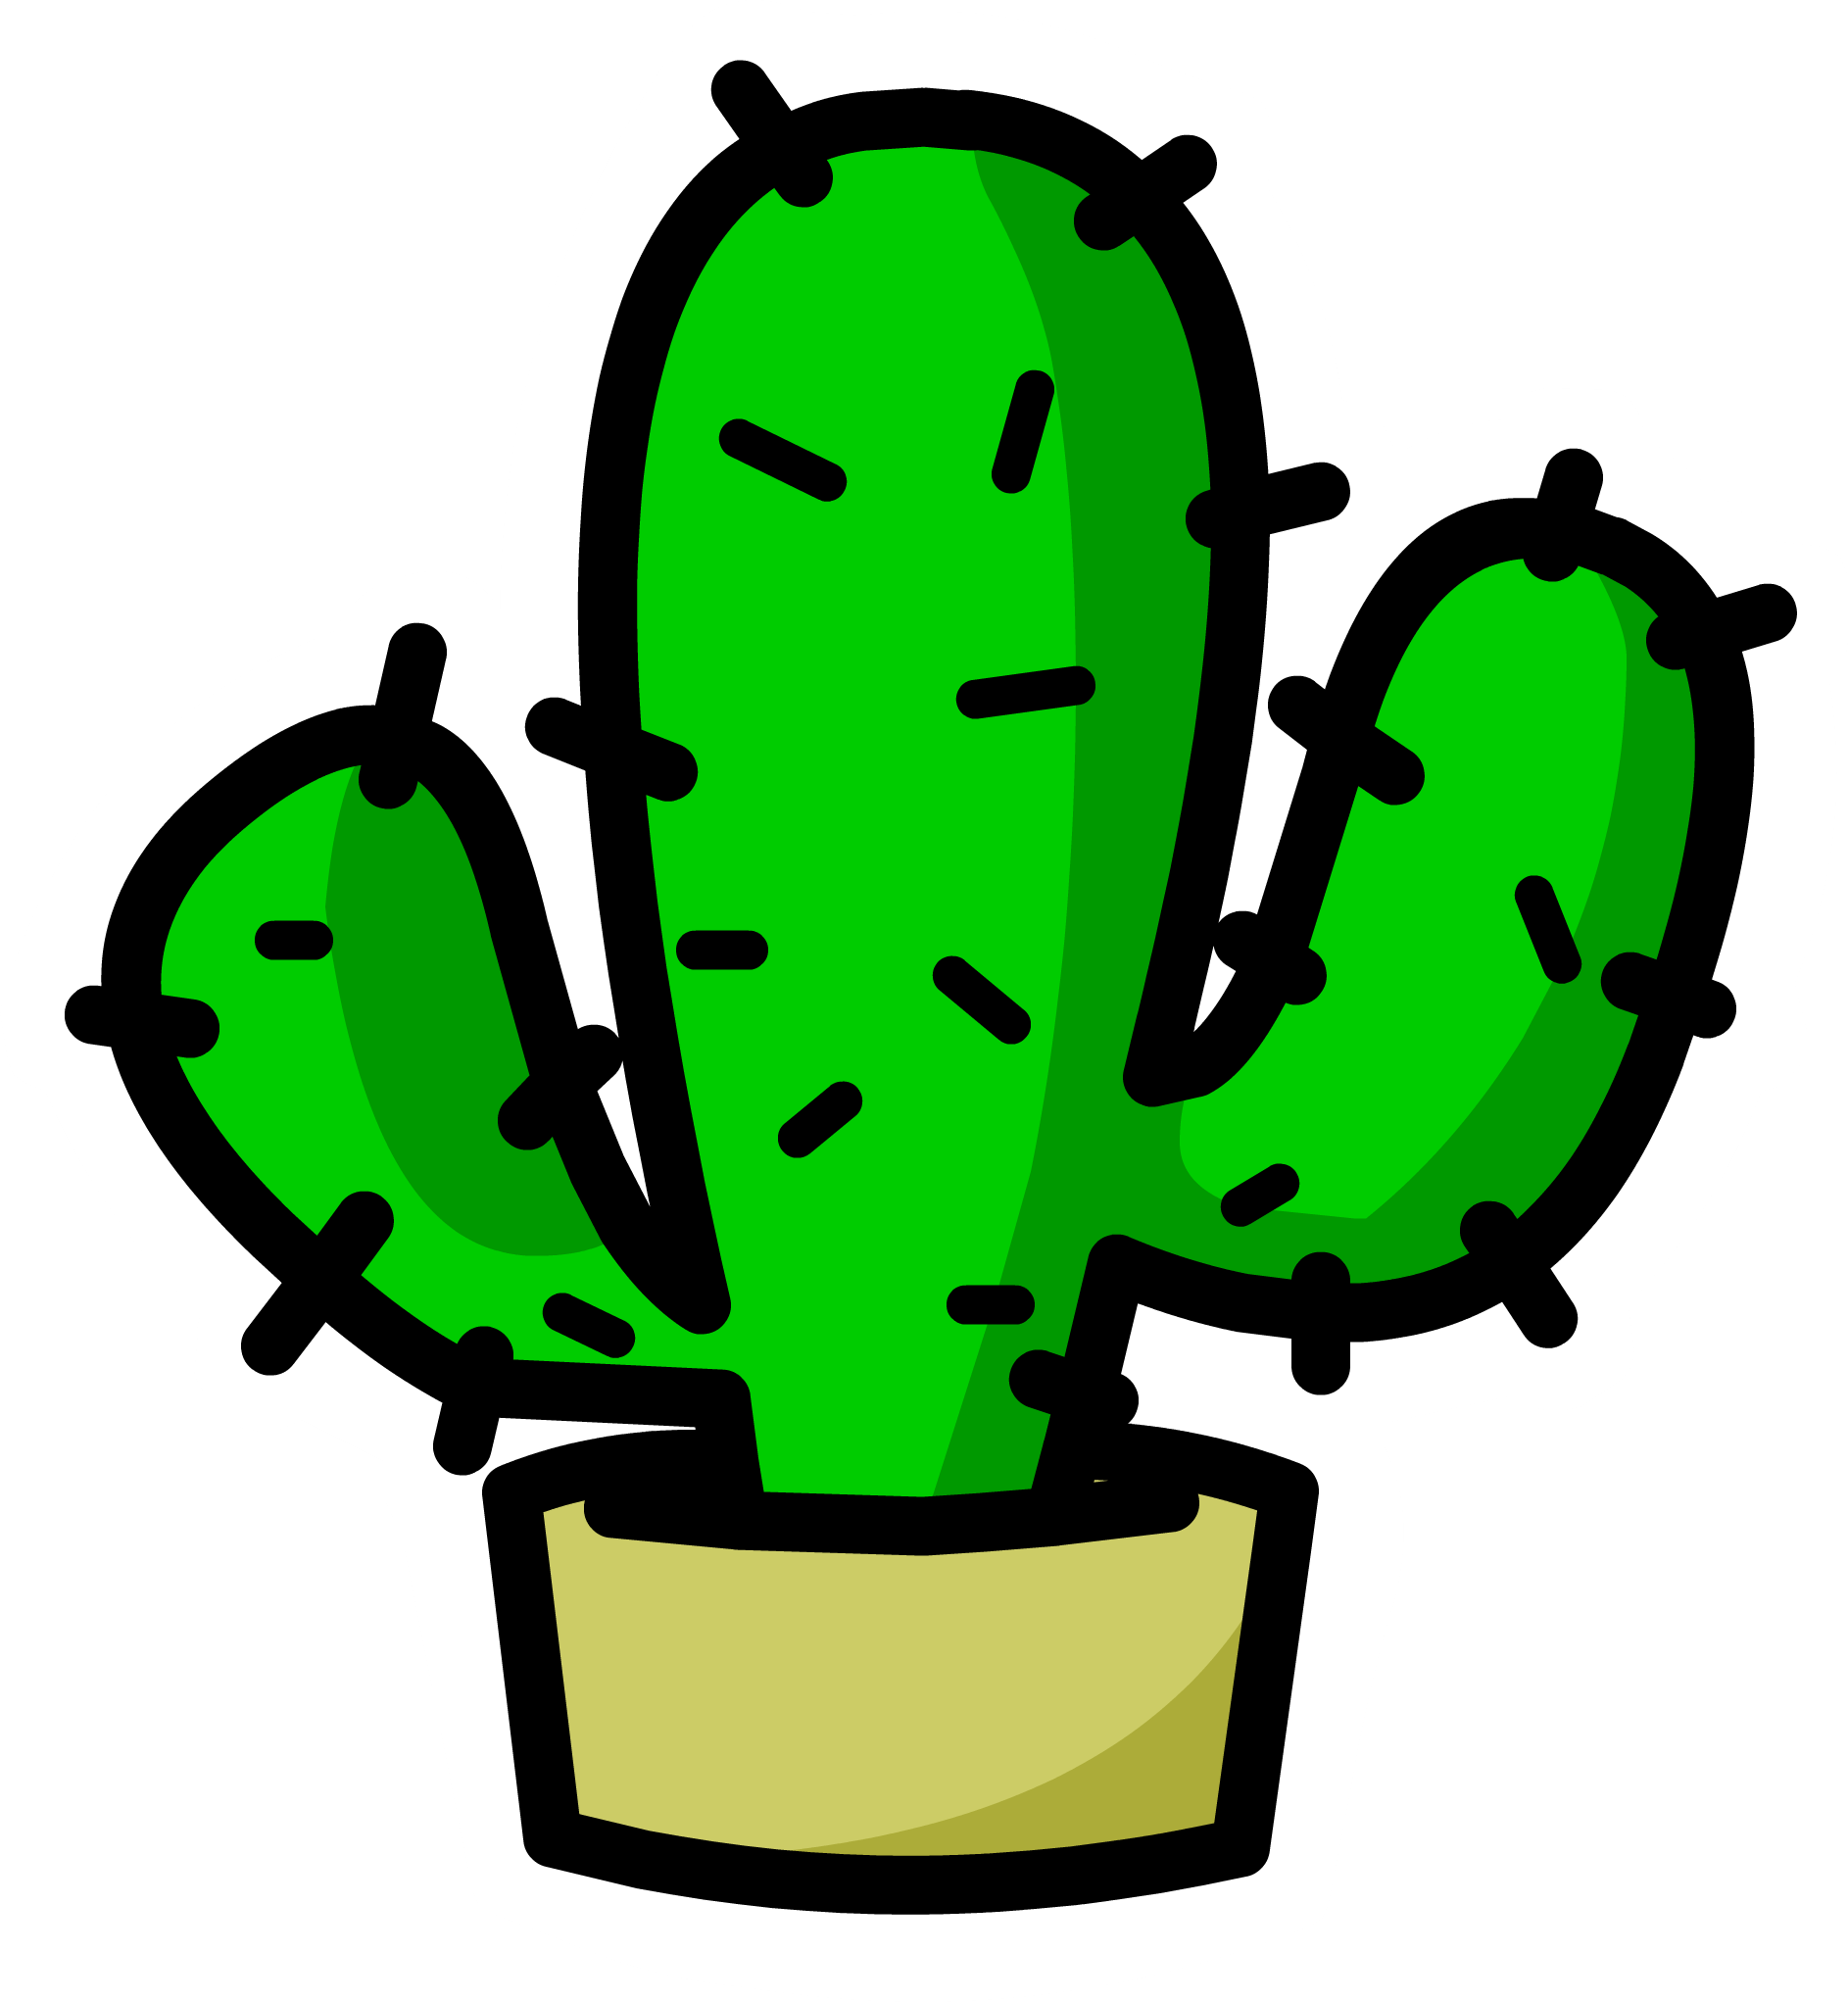 Cactus pin | Club Penguin Wiki | Fandom powered by Wikia